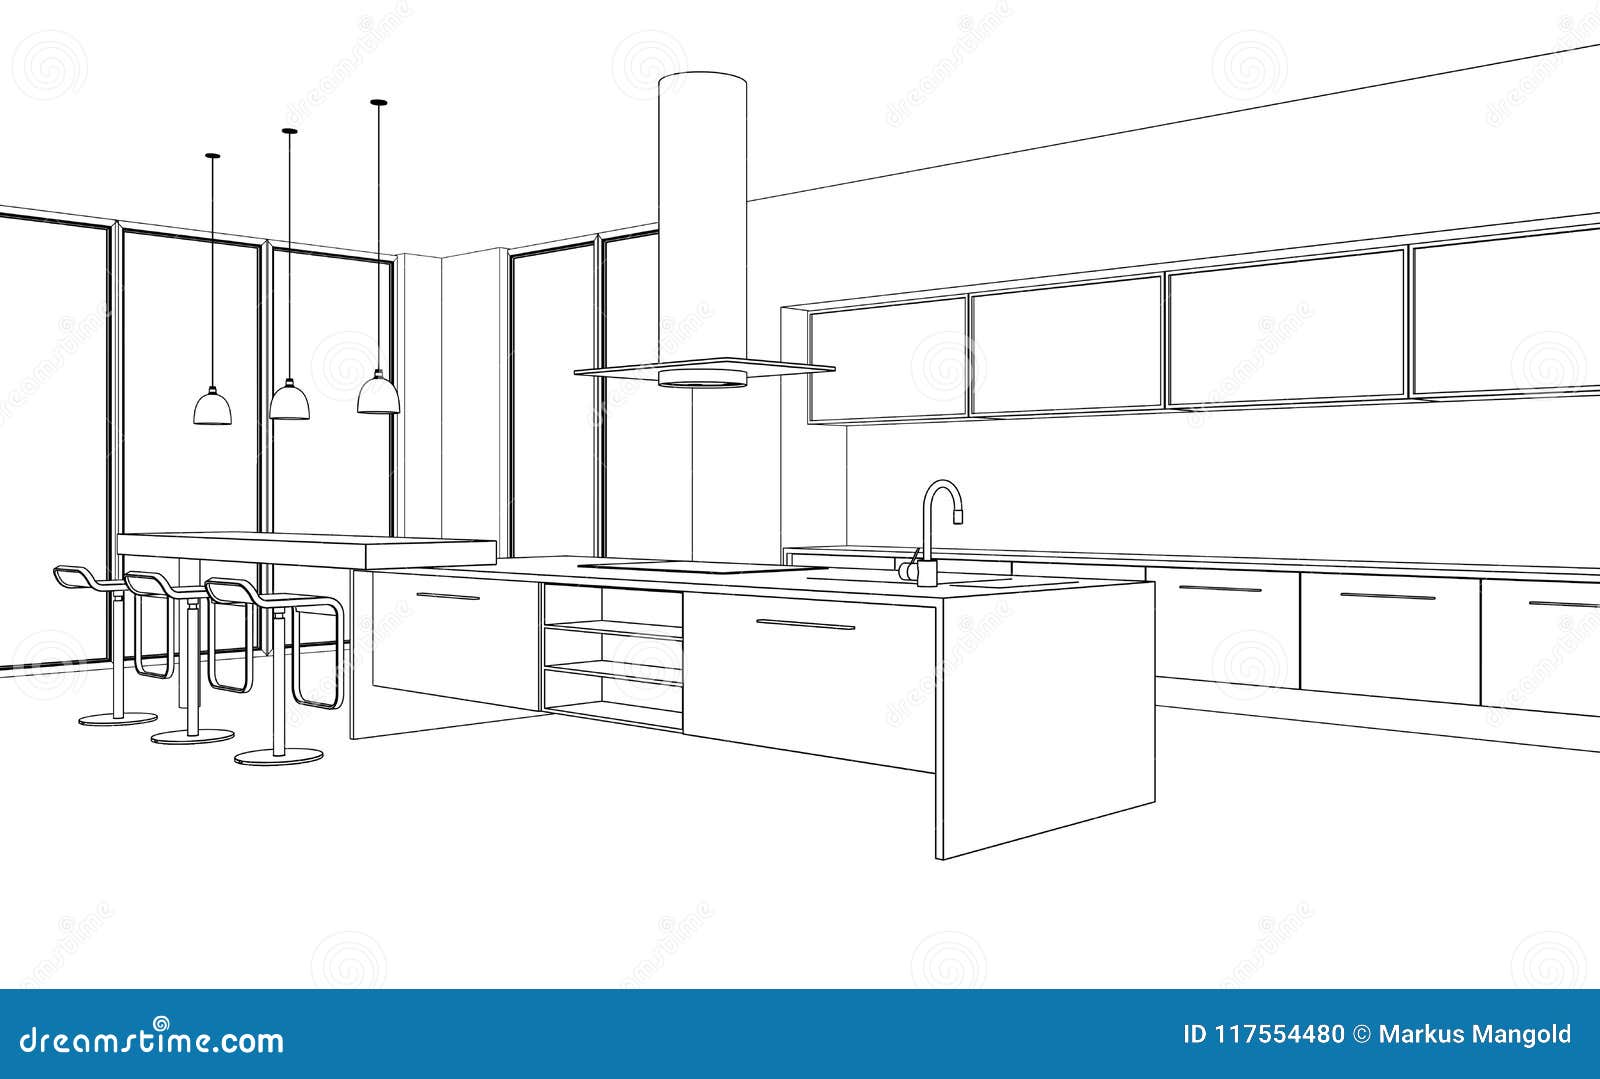 Kitchen Design Principles - Home Design Tutorials